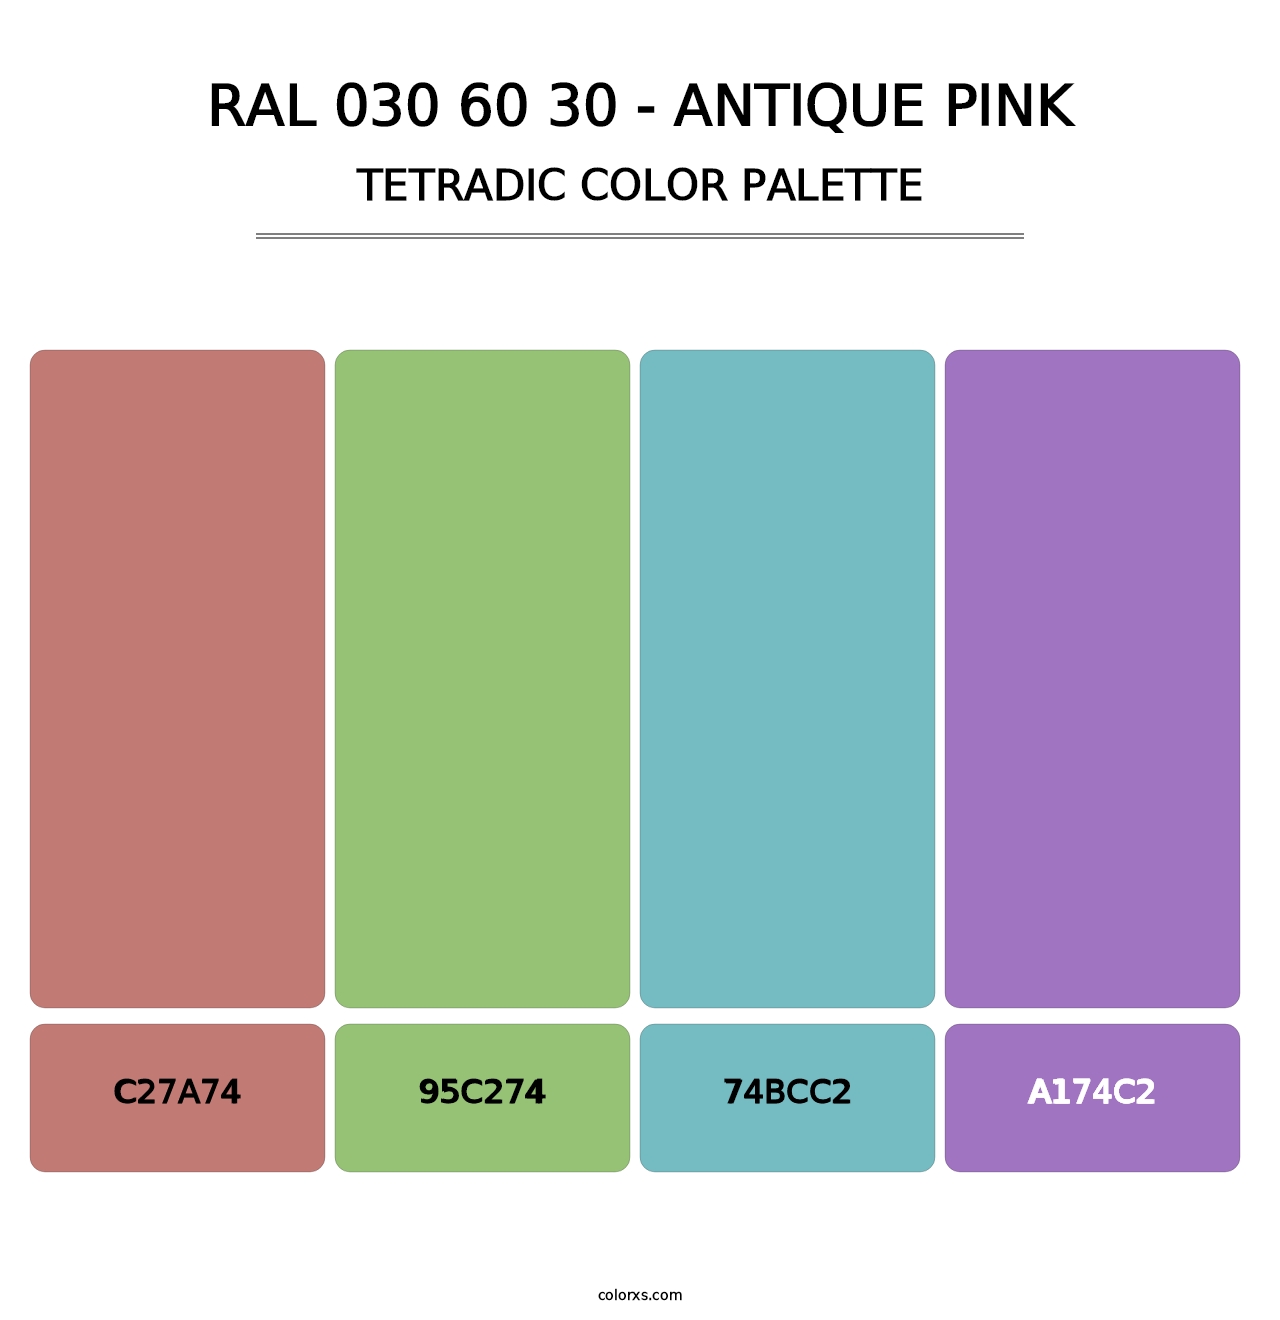 RAL 030 60 30 - Antique Pink - Tetradic Color Palette